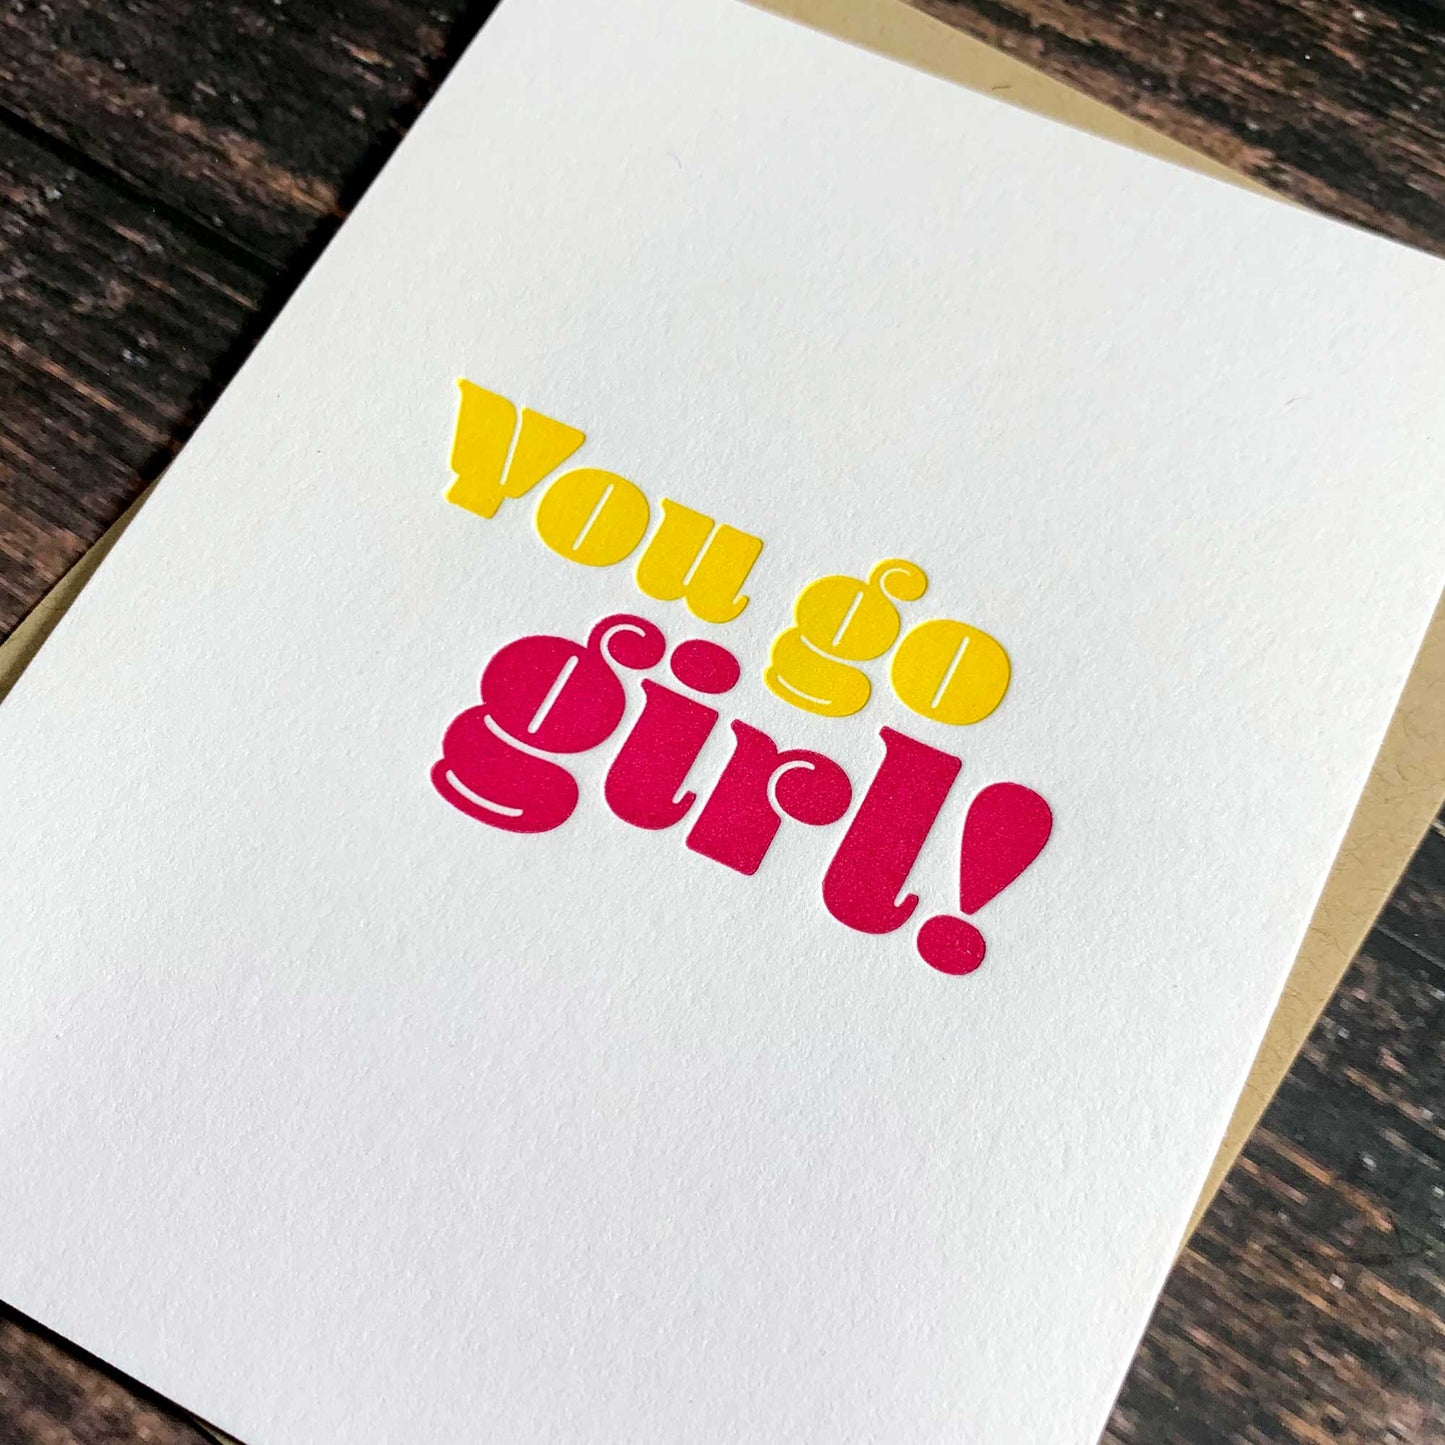 You go girl! Encouragement Card, Congratulations Card, Letterpress printed, view shows letterpress impression, includes envelope